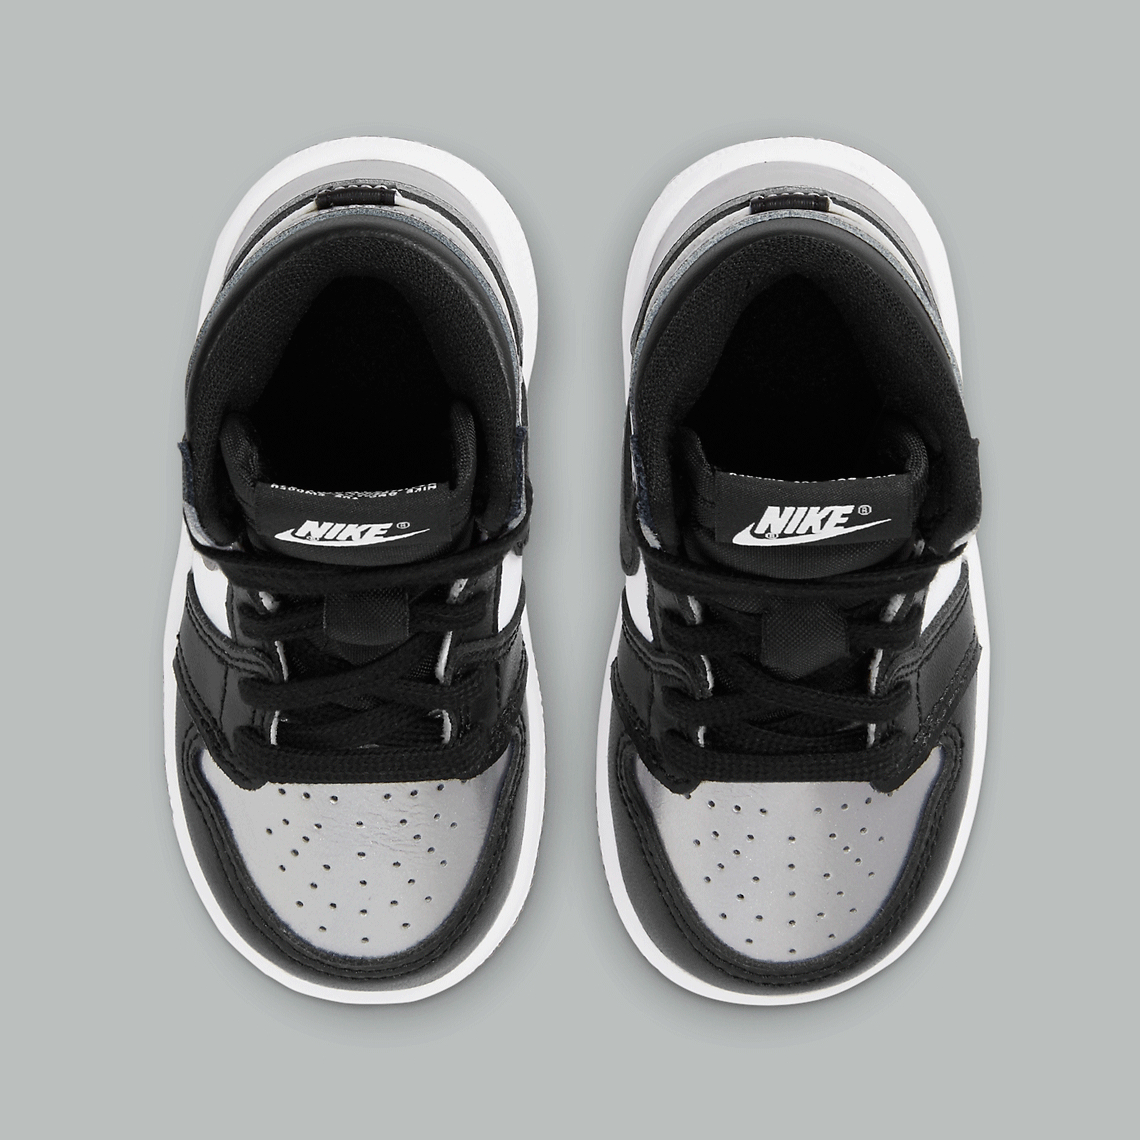 Nike Air Jordan 1 High OG Infant & Toddler “Silver Toe” ナイキ エアジョーダン 1 レトロ ハイ OG Infant & Toddler "シルバー トゥ" Black/ Metallic Silver-White-Black CU0450-001